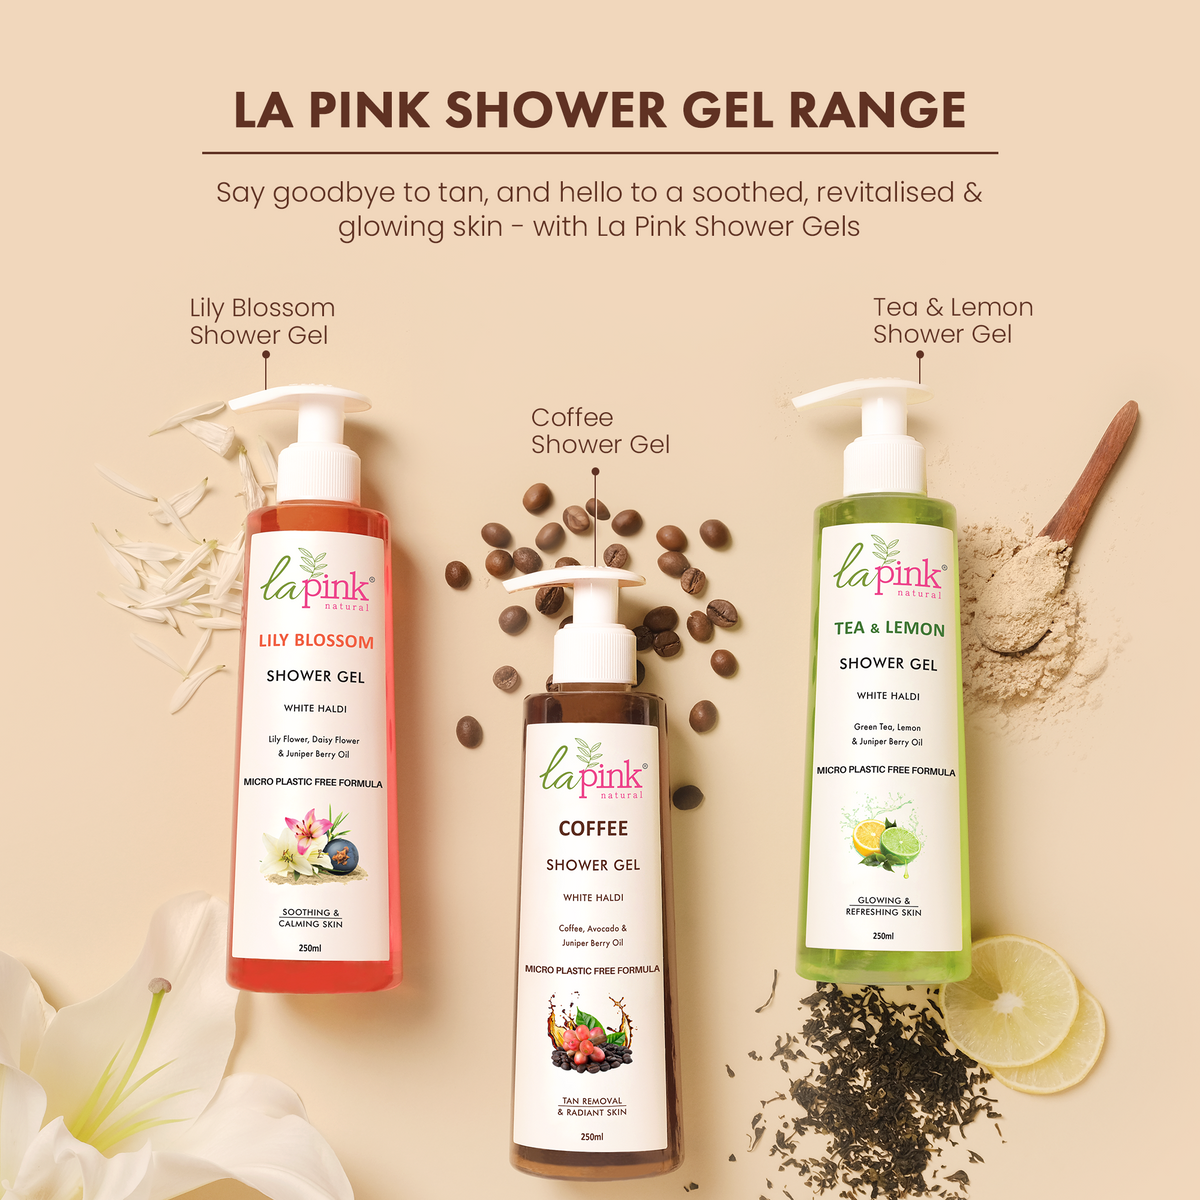 "La Pink Tea & Lemon Shower Gel with White Haldi for Glowing & Refreshing Skin 250 ML "